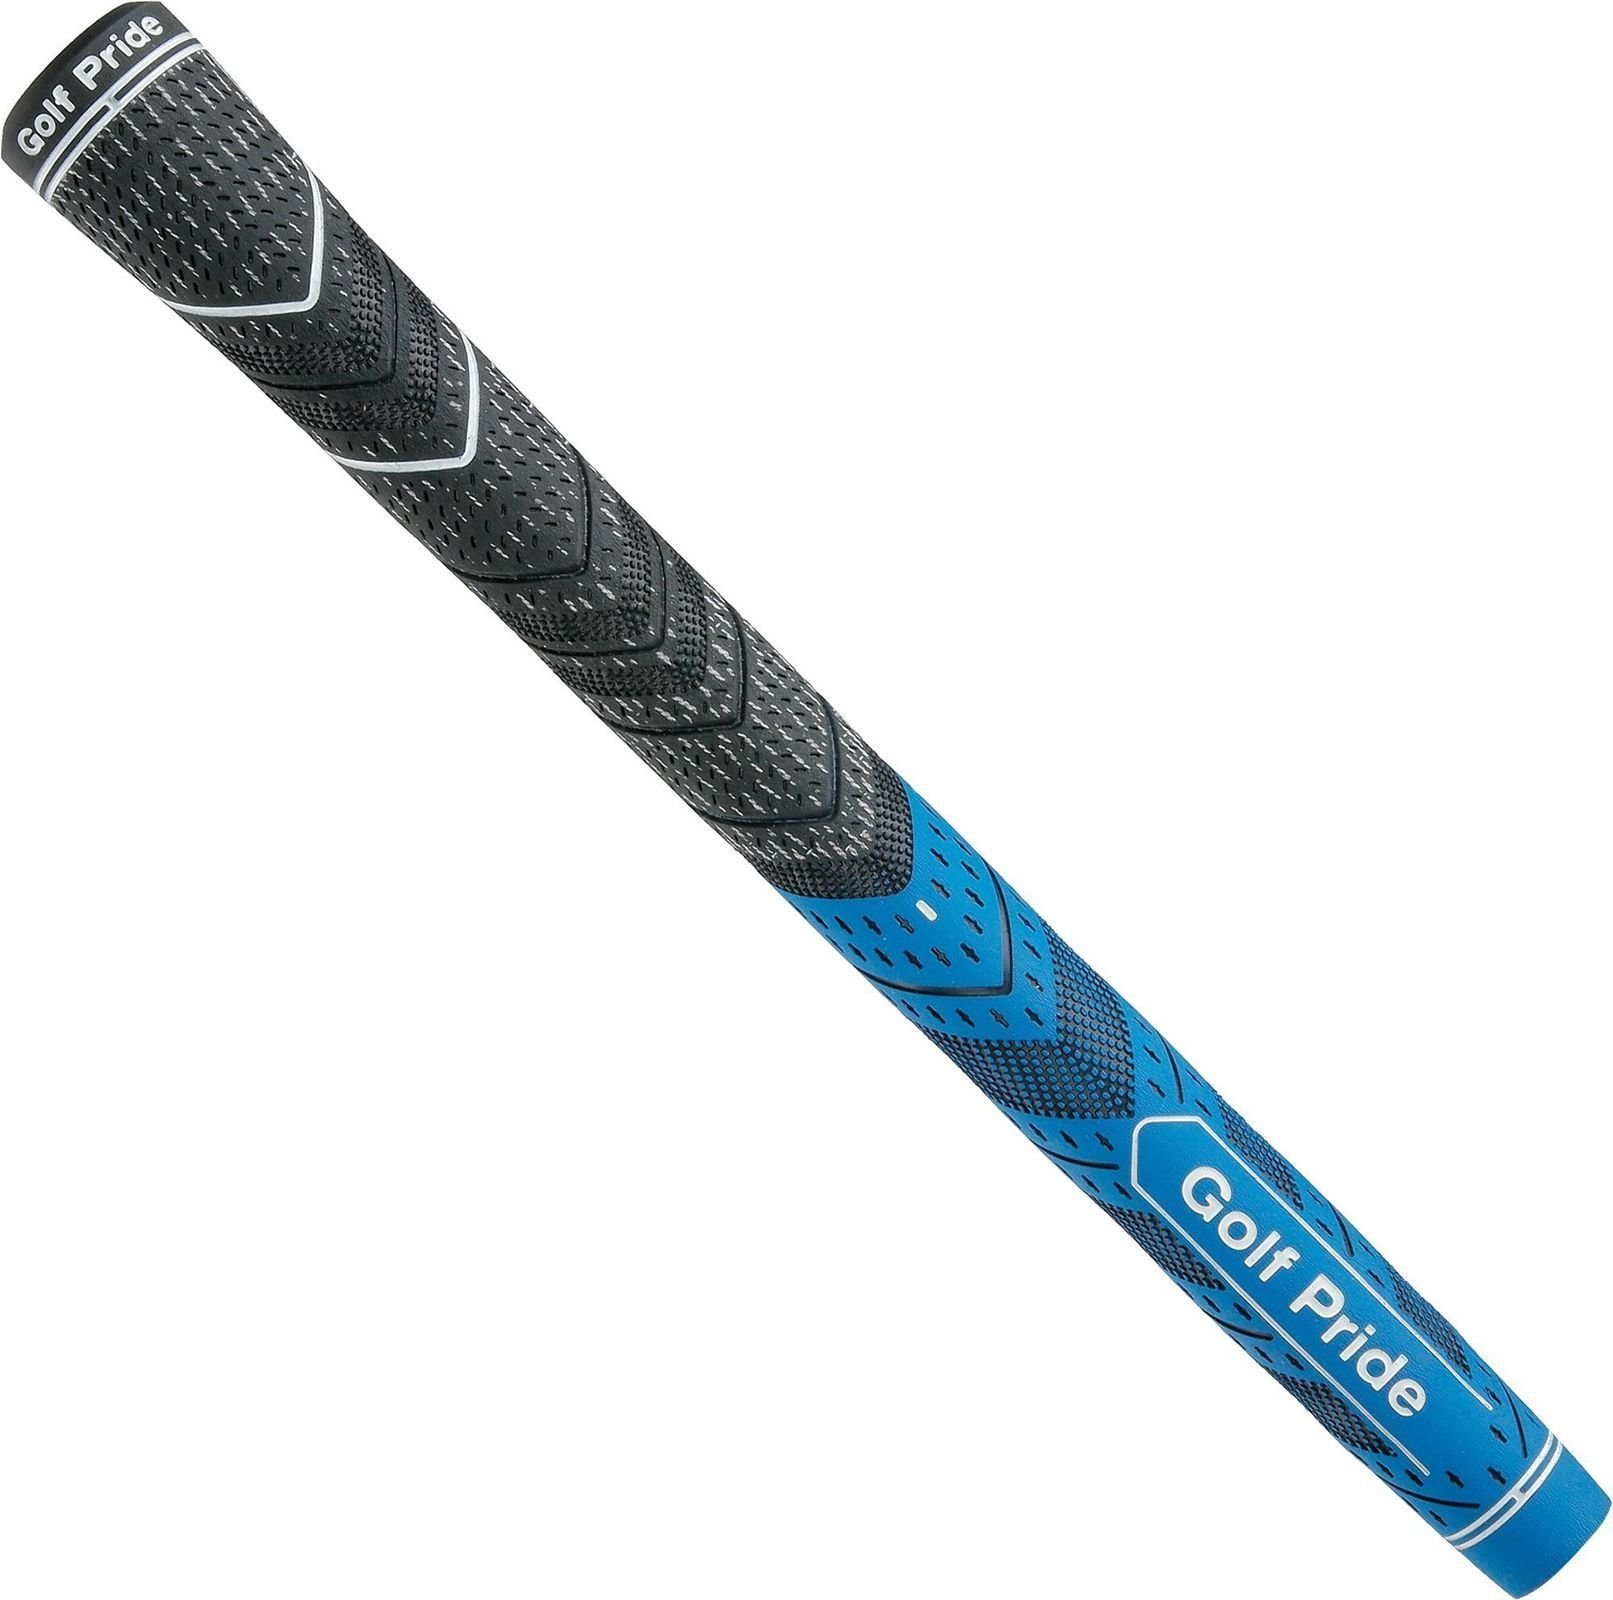 Grip Golf Pride Multi Compound Cord Plus 4 Grip Charcoal Upper/Blue